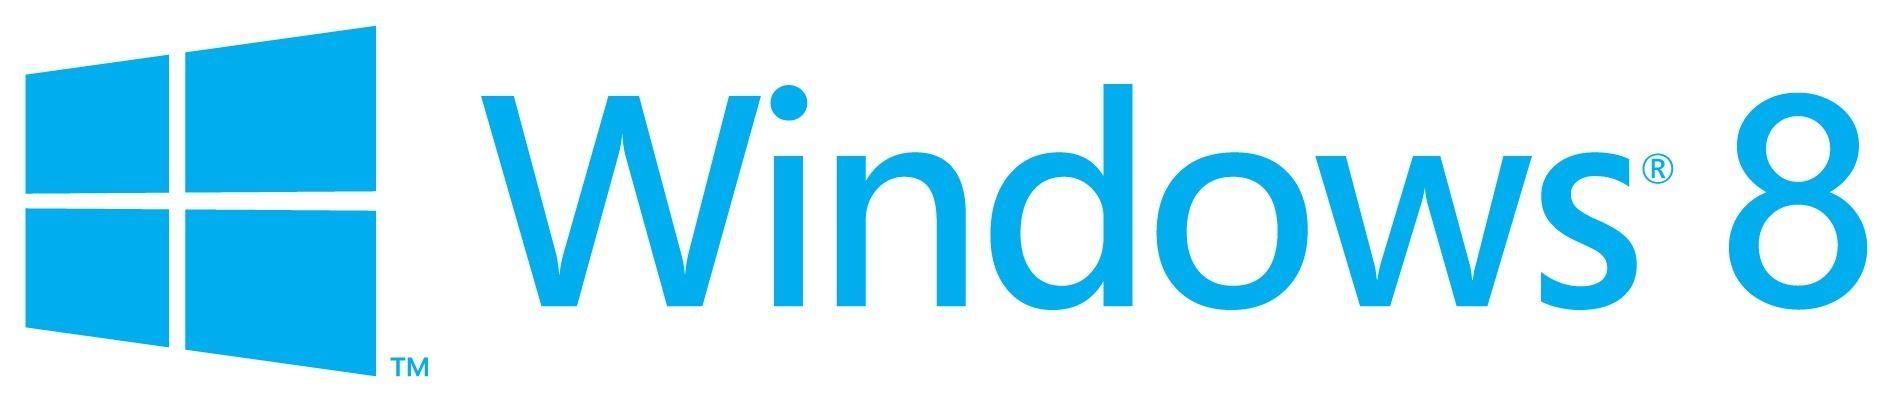 Win 8 Logo - New Windows 8 Logo Is Pure Genius | PCWorld